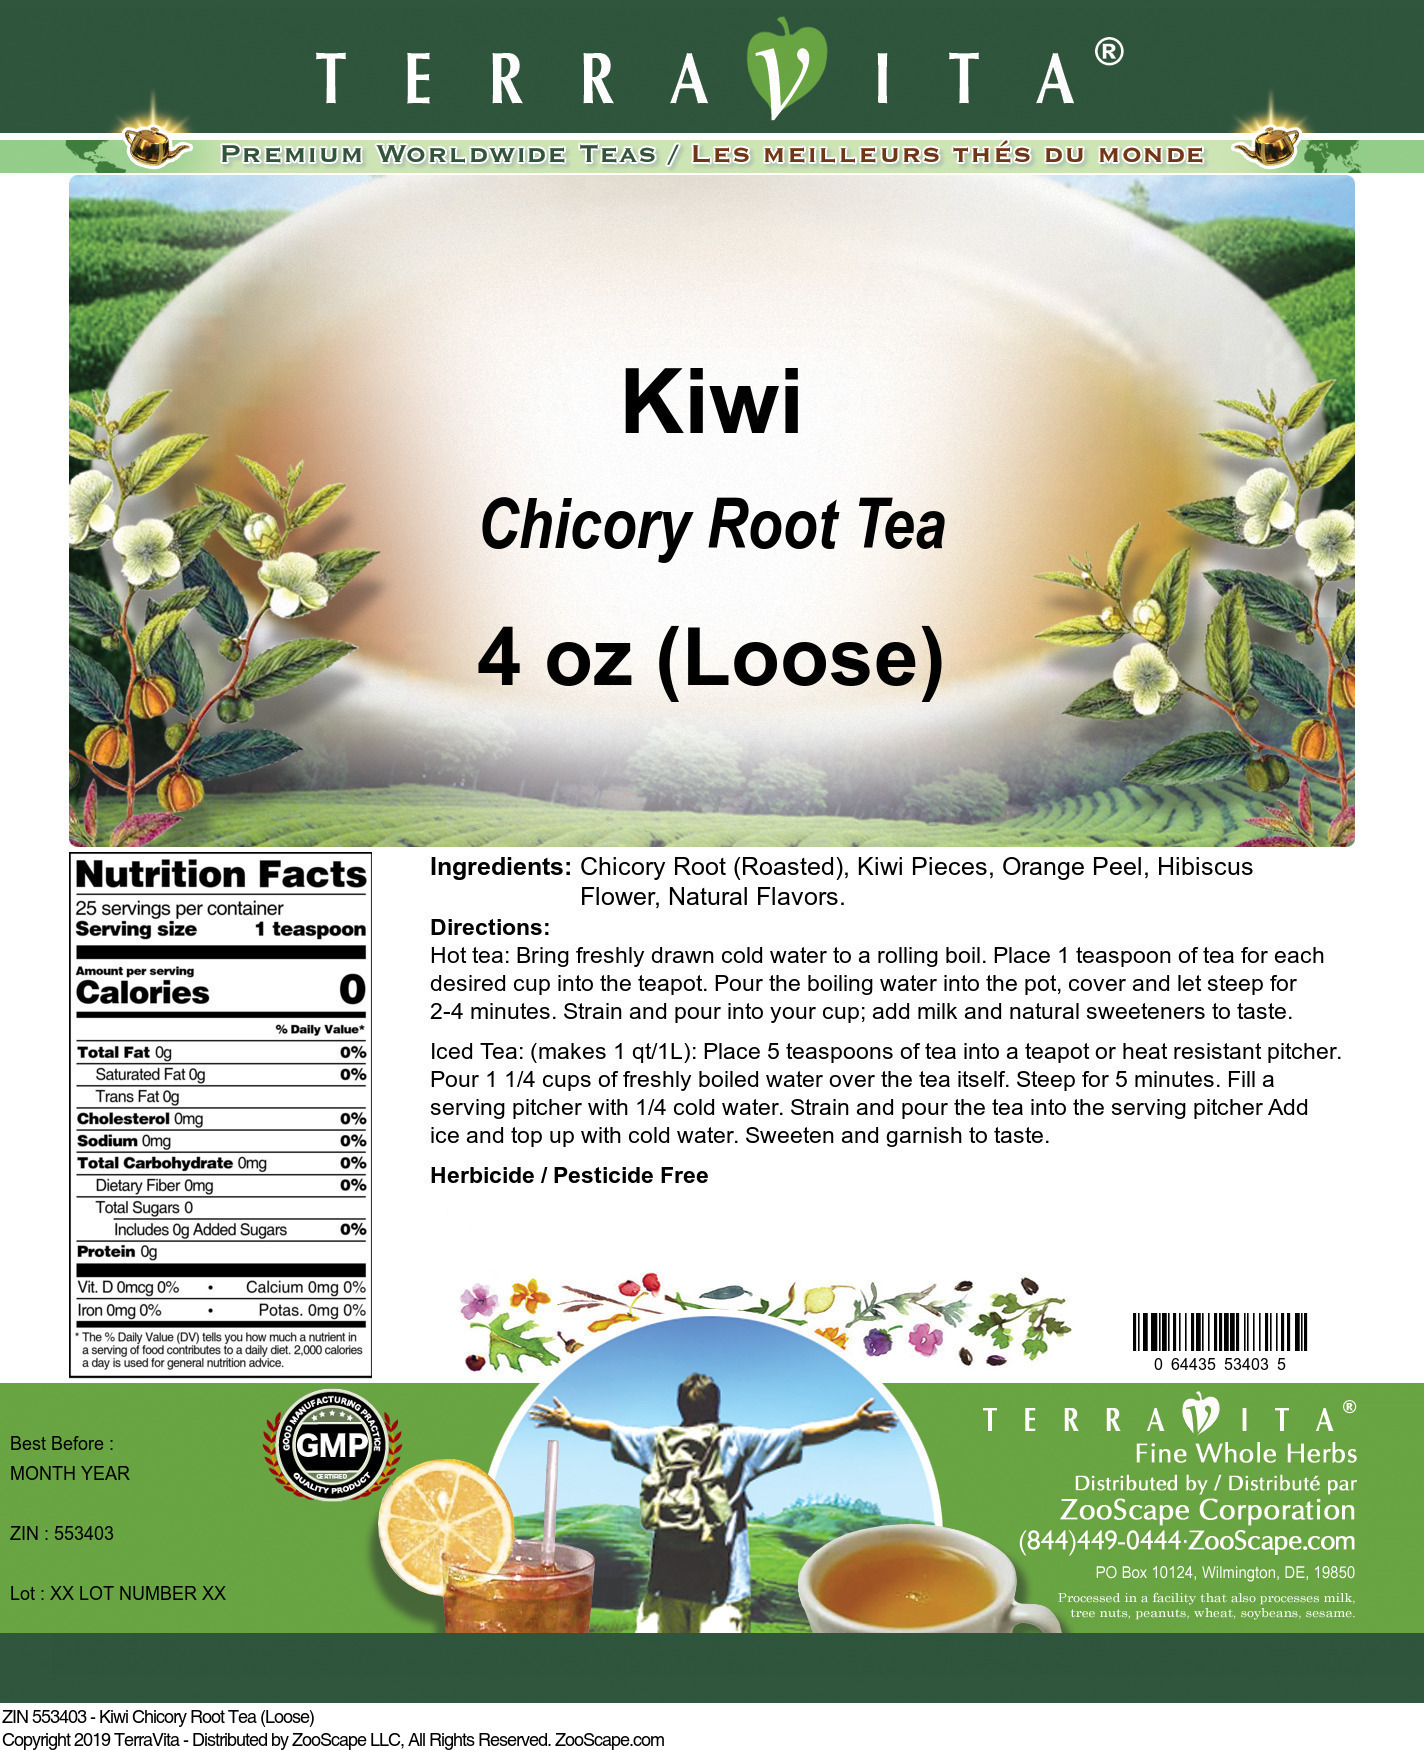 Kiwi Chicory Root Tea (Loose) - Label